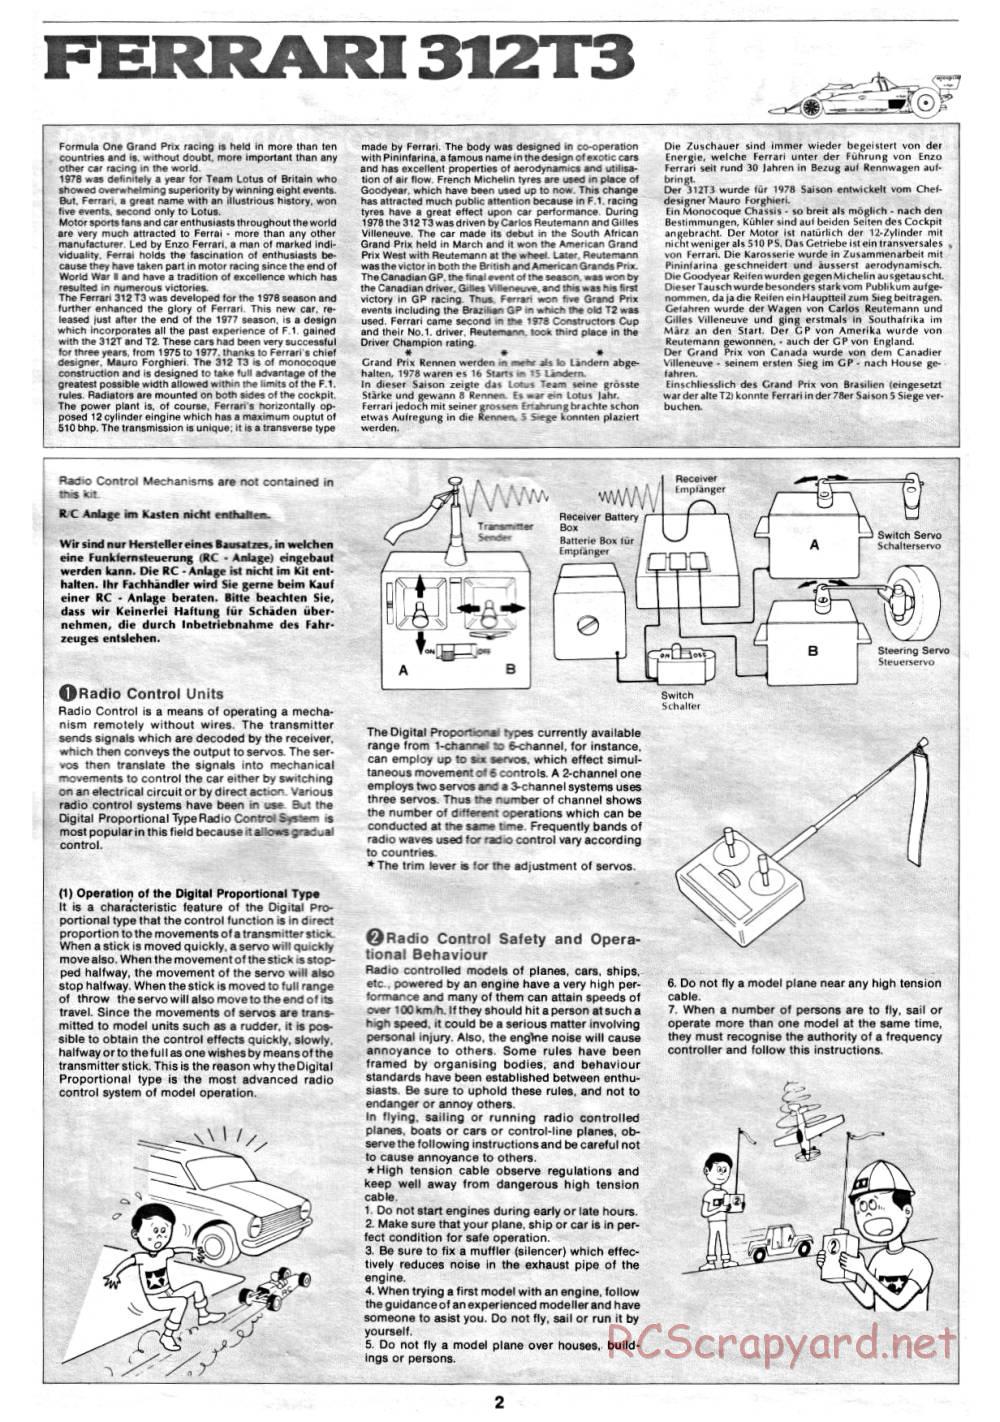 Tamiya - Ferrari 312T3 - 58011 - Manual - Page 2